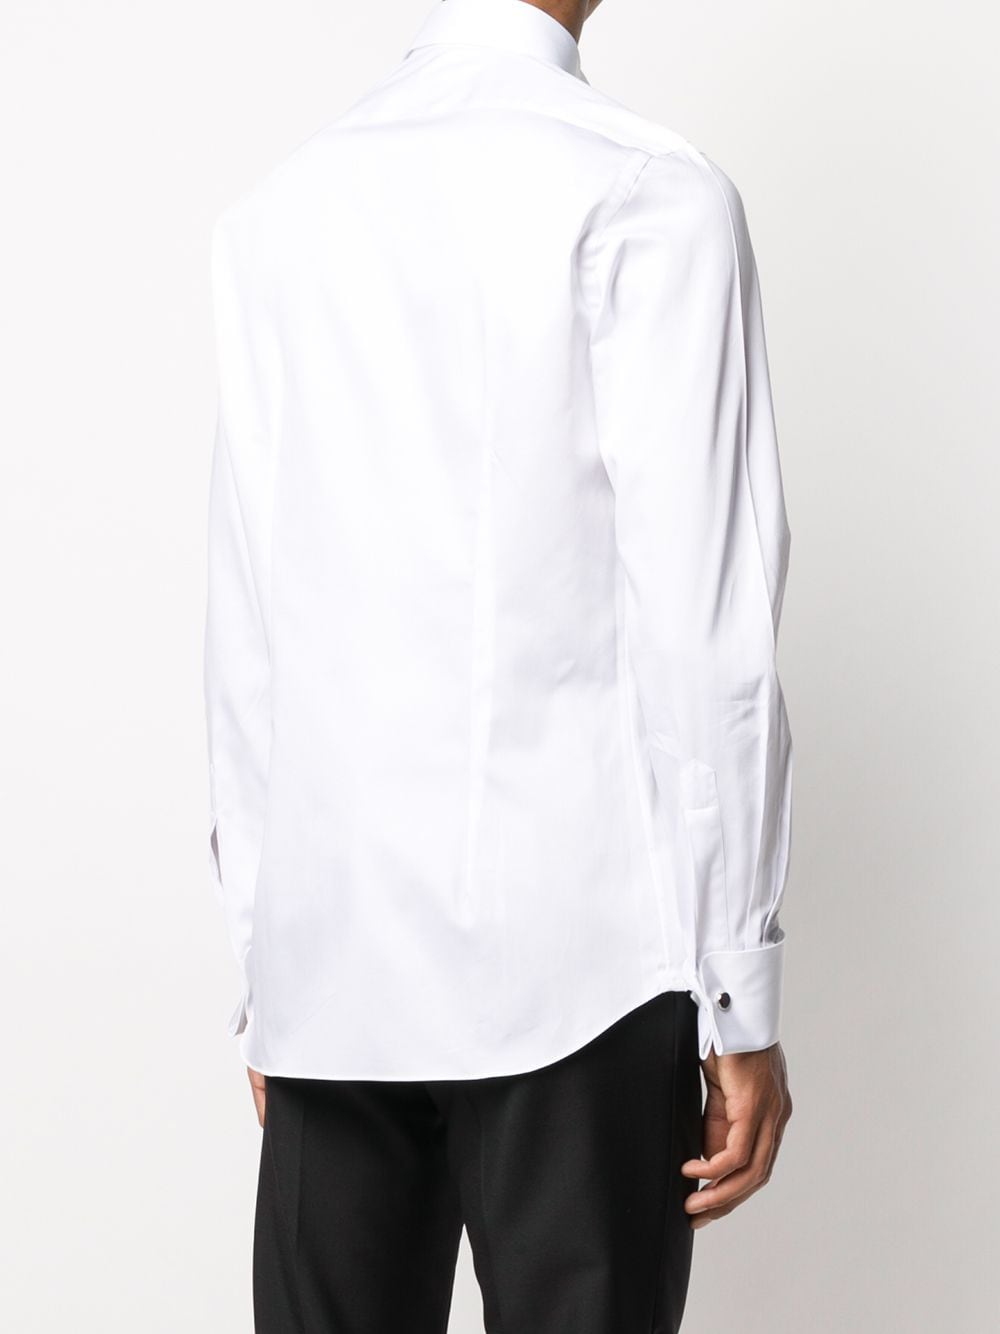 white shirt with diplomatic collar cufflinks